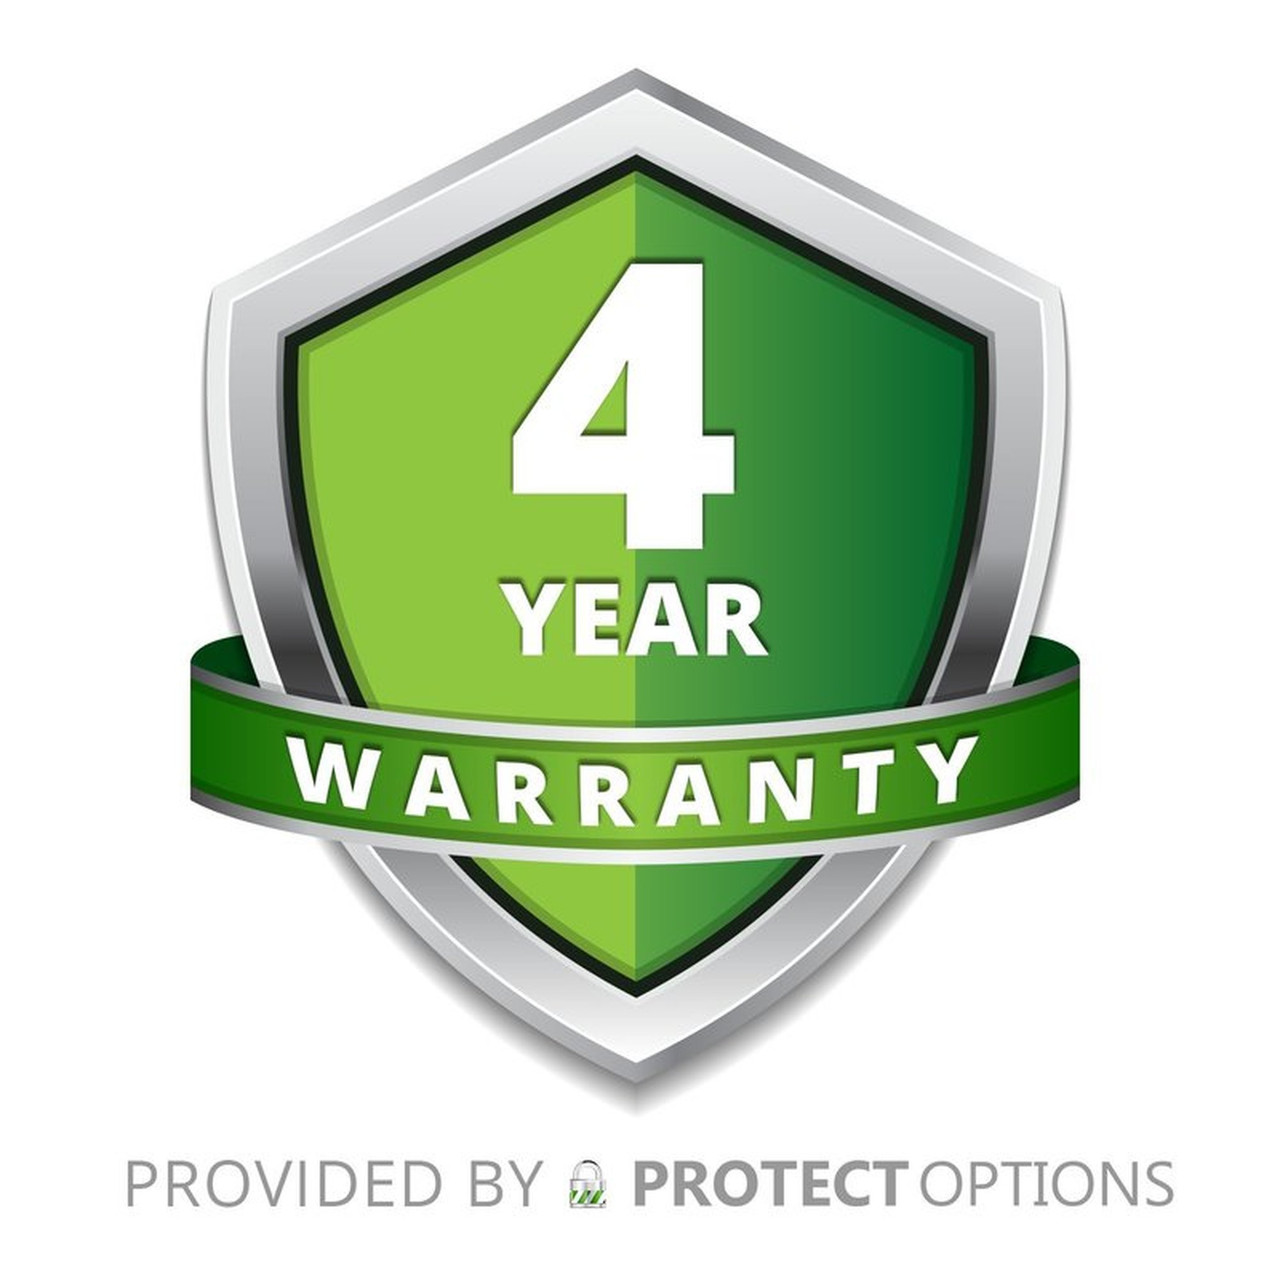 4 Year Warranty No Deductible - Monitors sale price of $700-$999.99